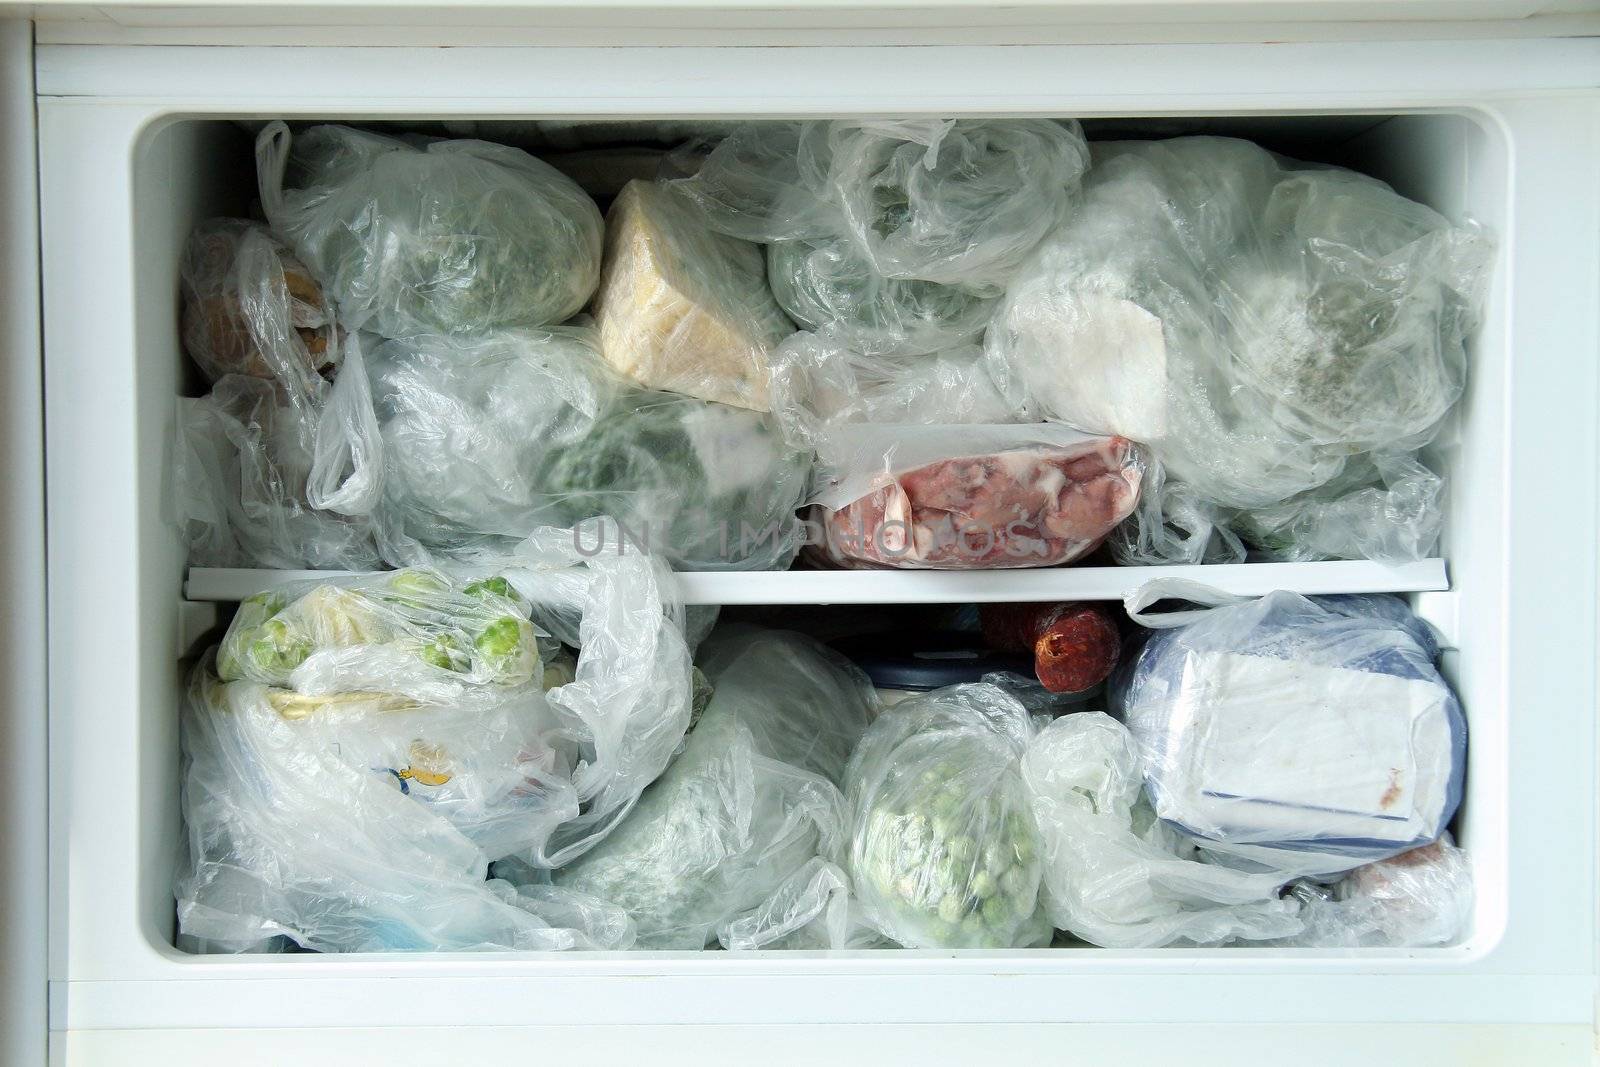 freezer full of frozen things,